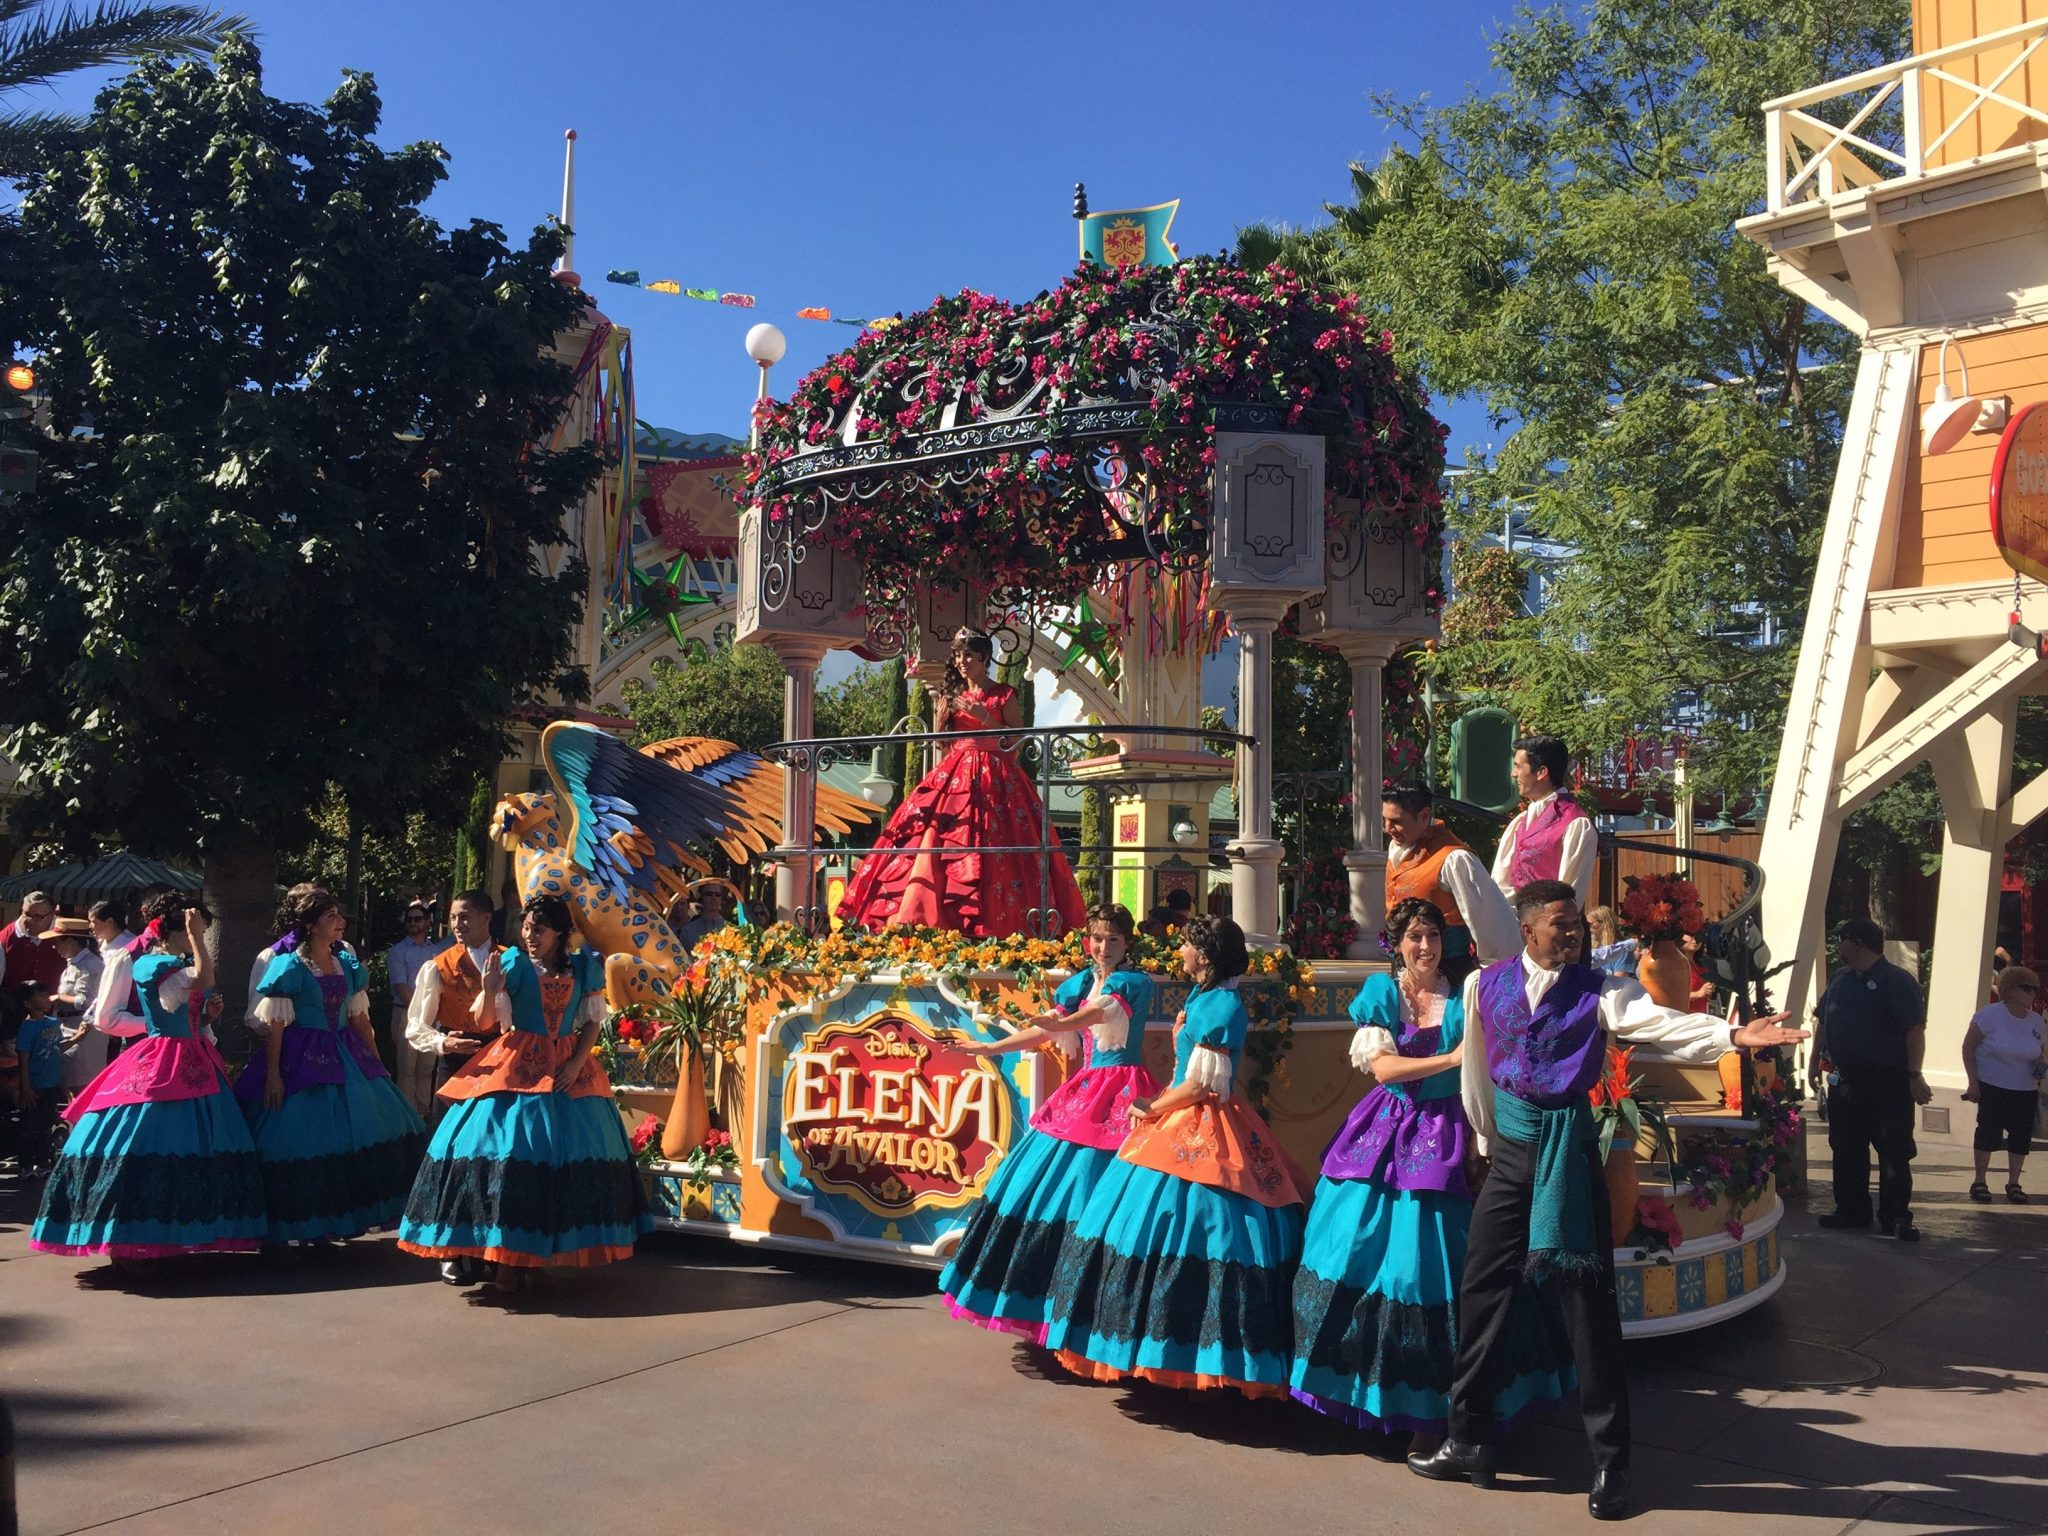 Princess Elena of Avalor Arrives at the Disneyland Resort for Festival of Holidays